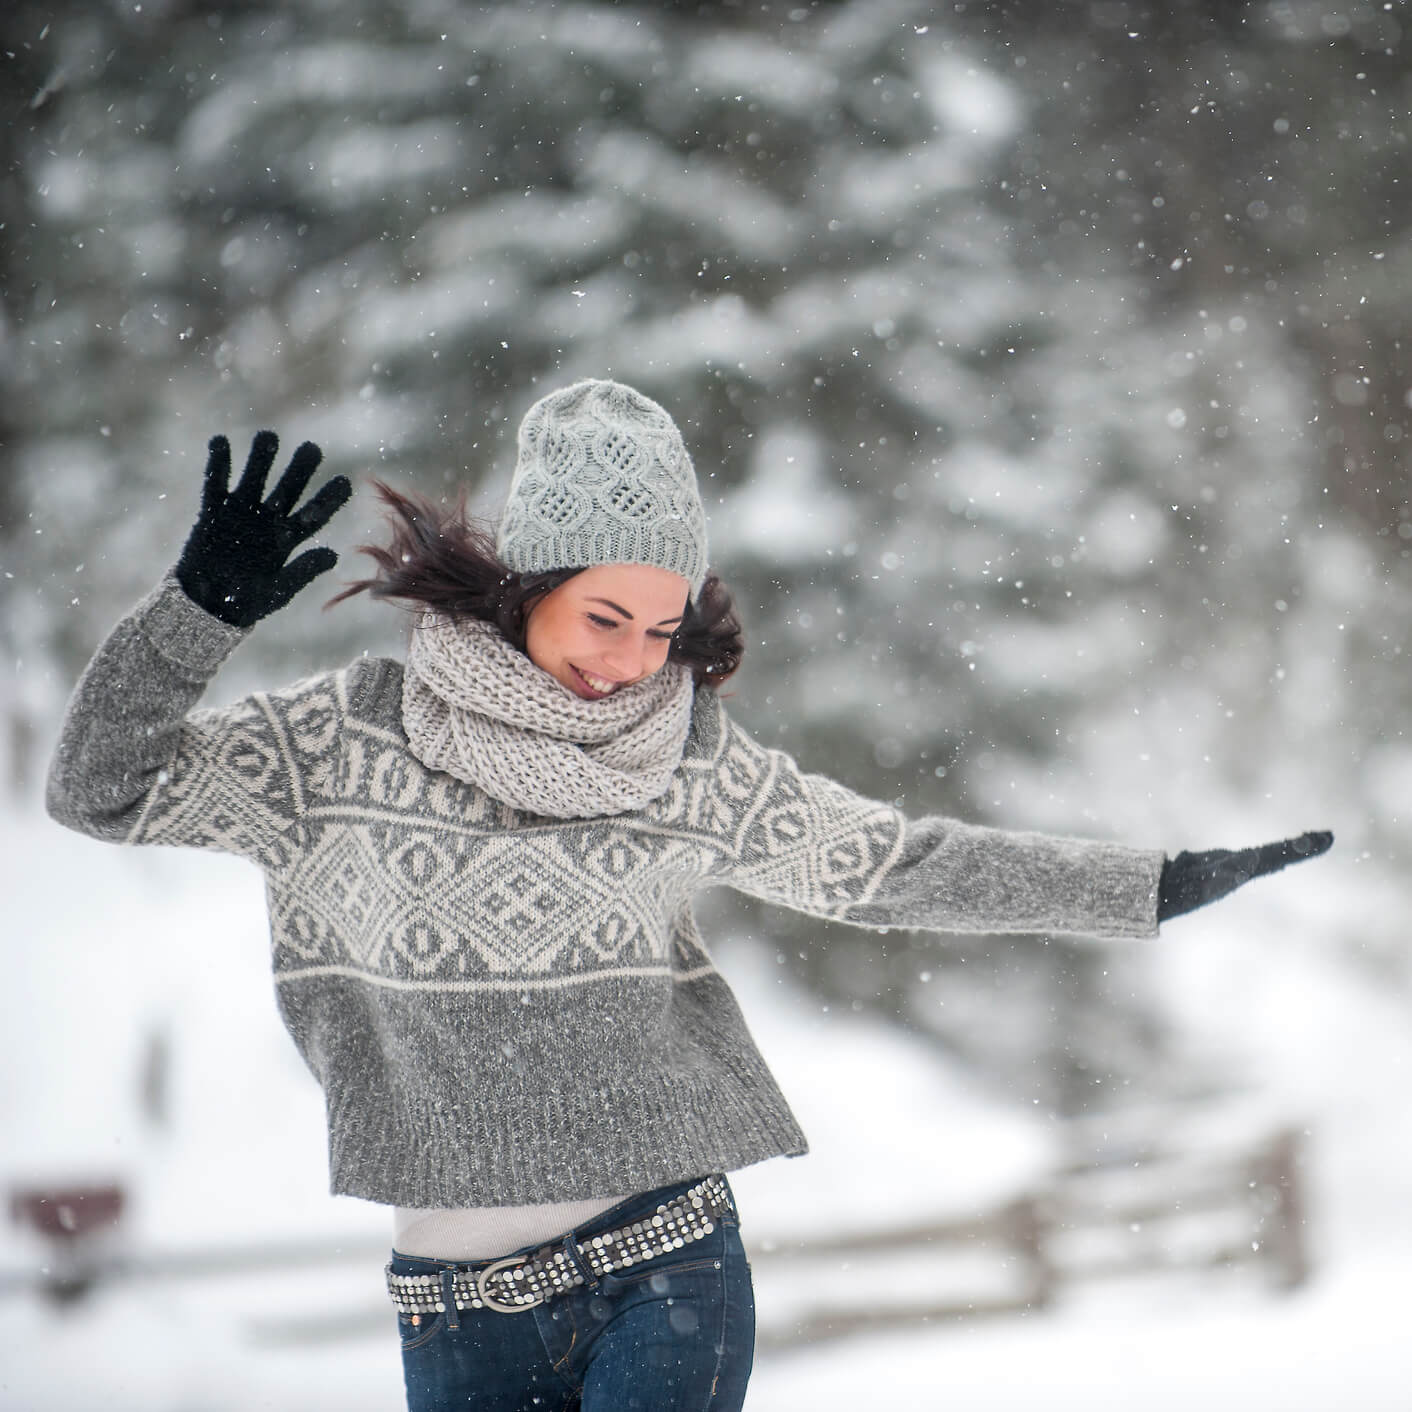 Take Five hotel pass - girl dancing in snow